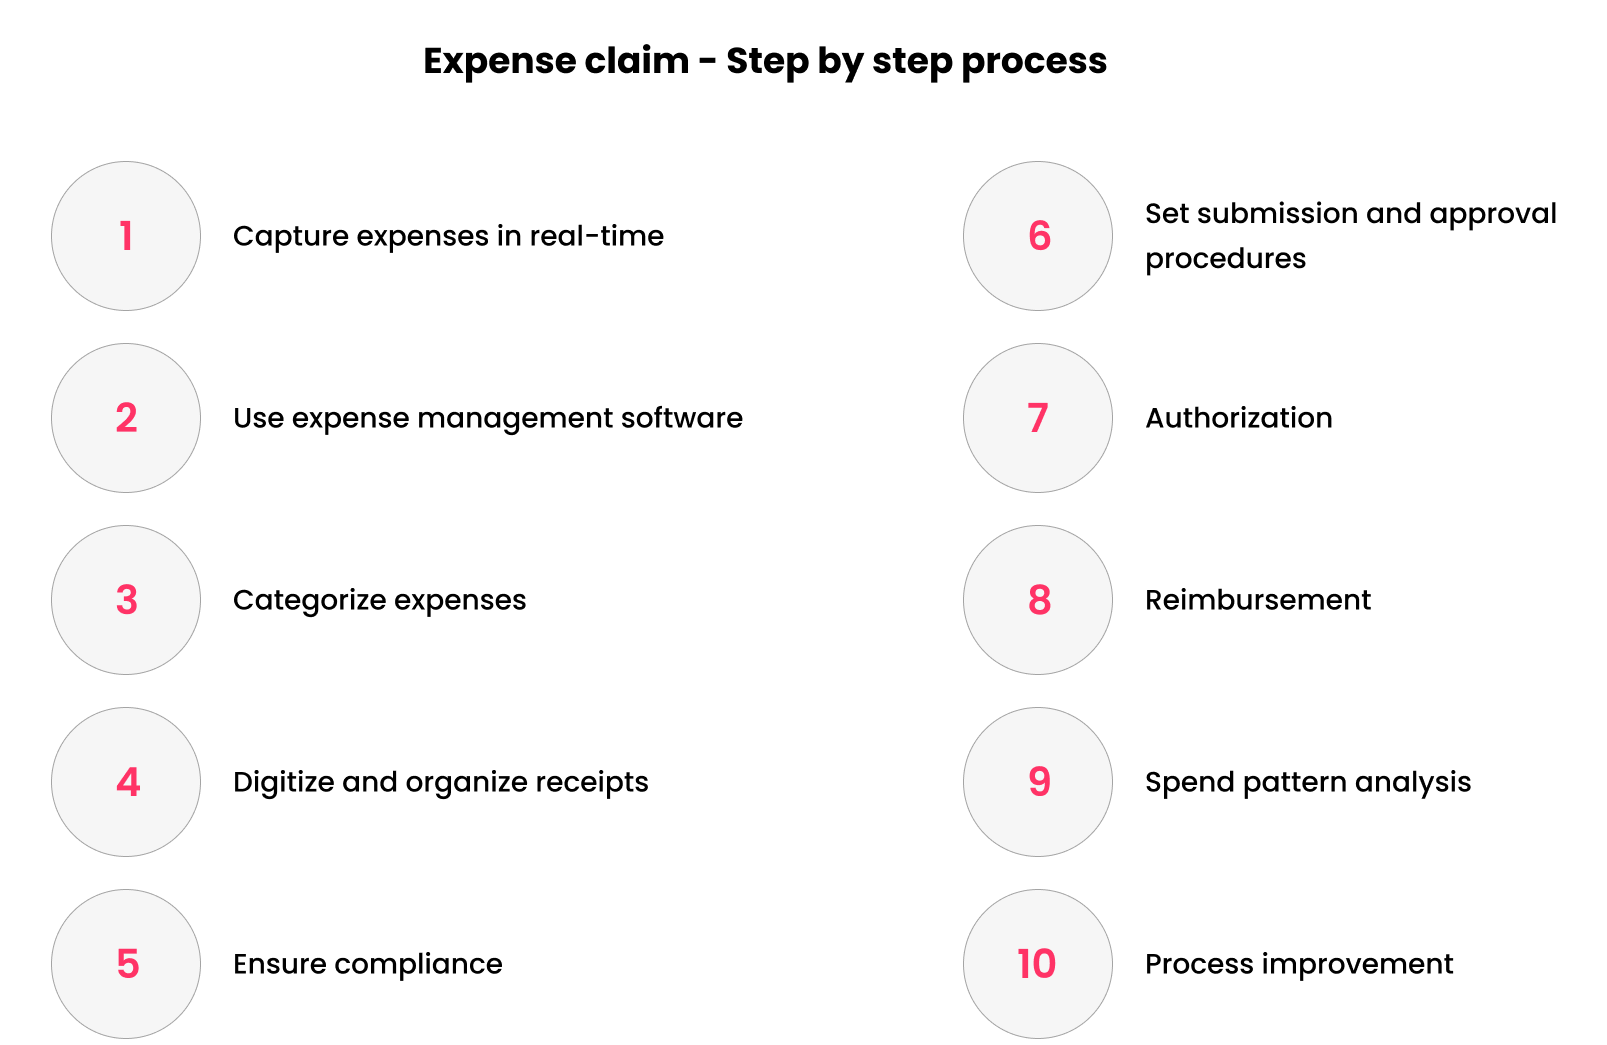 Expense claim - Step by Step process